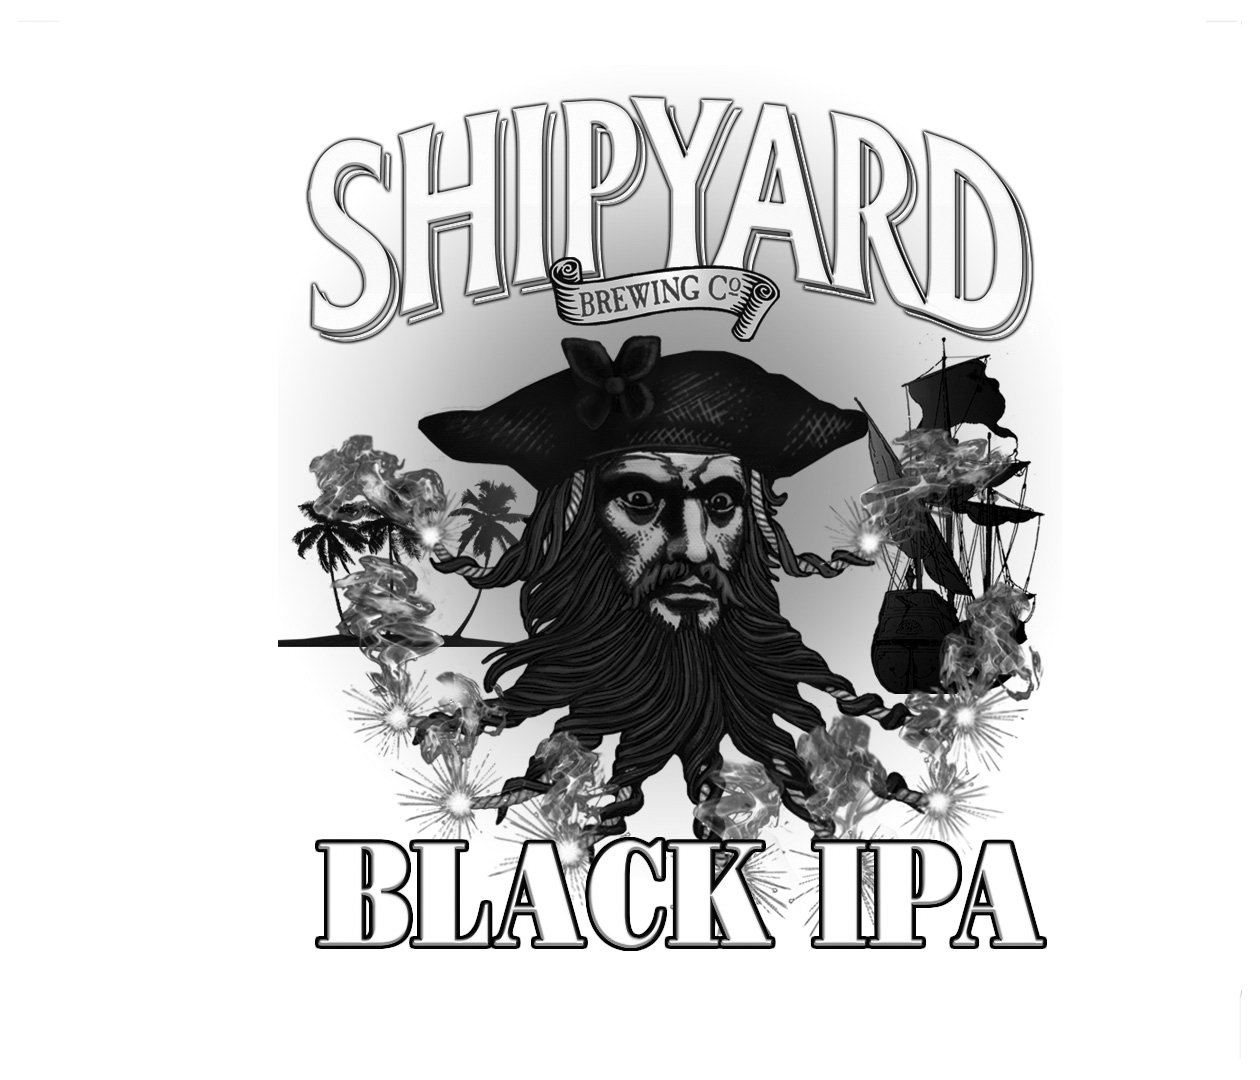  SHIPYARD BREWING CO. BLACK IPA